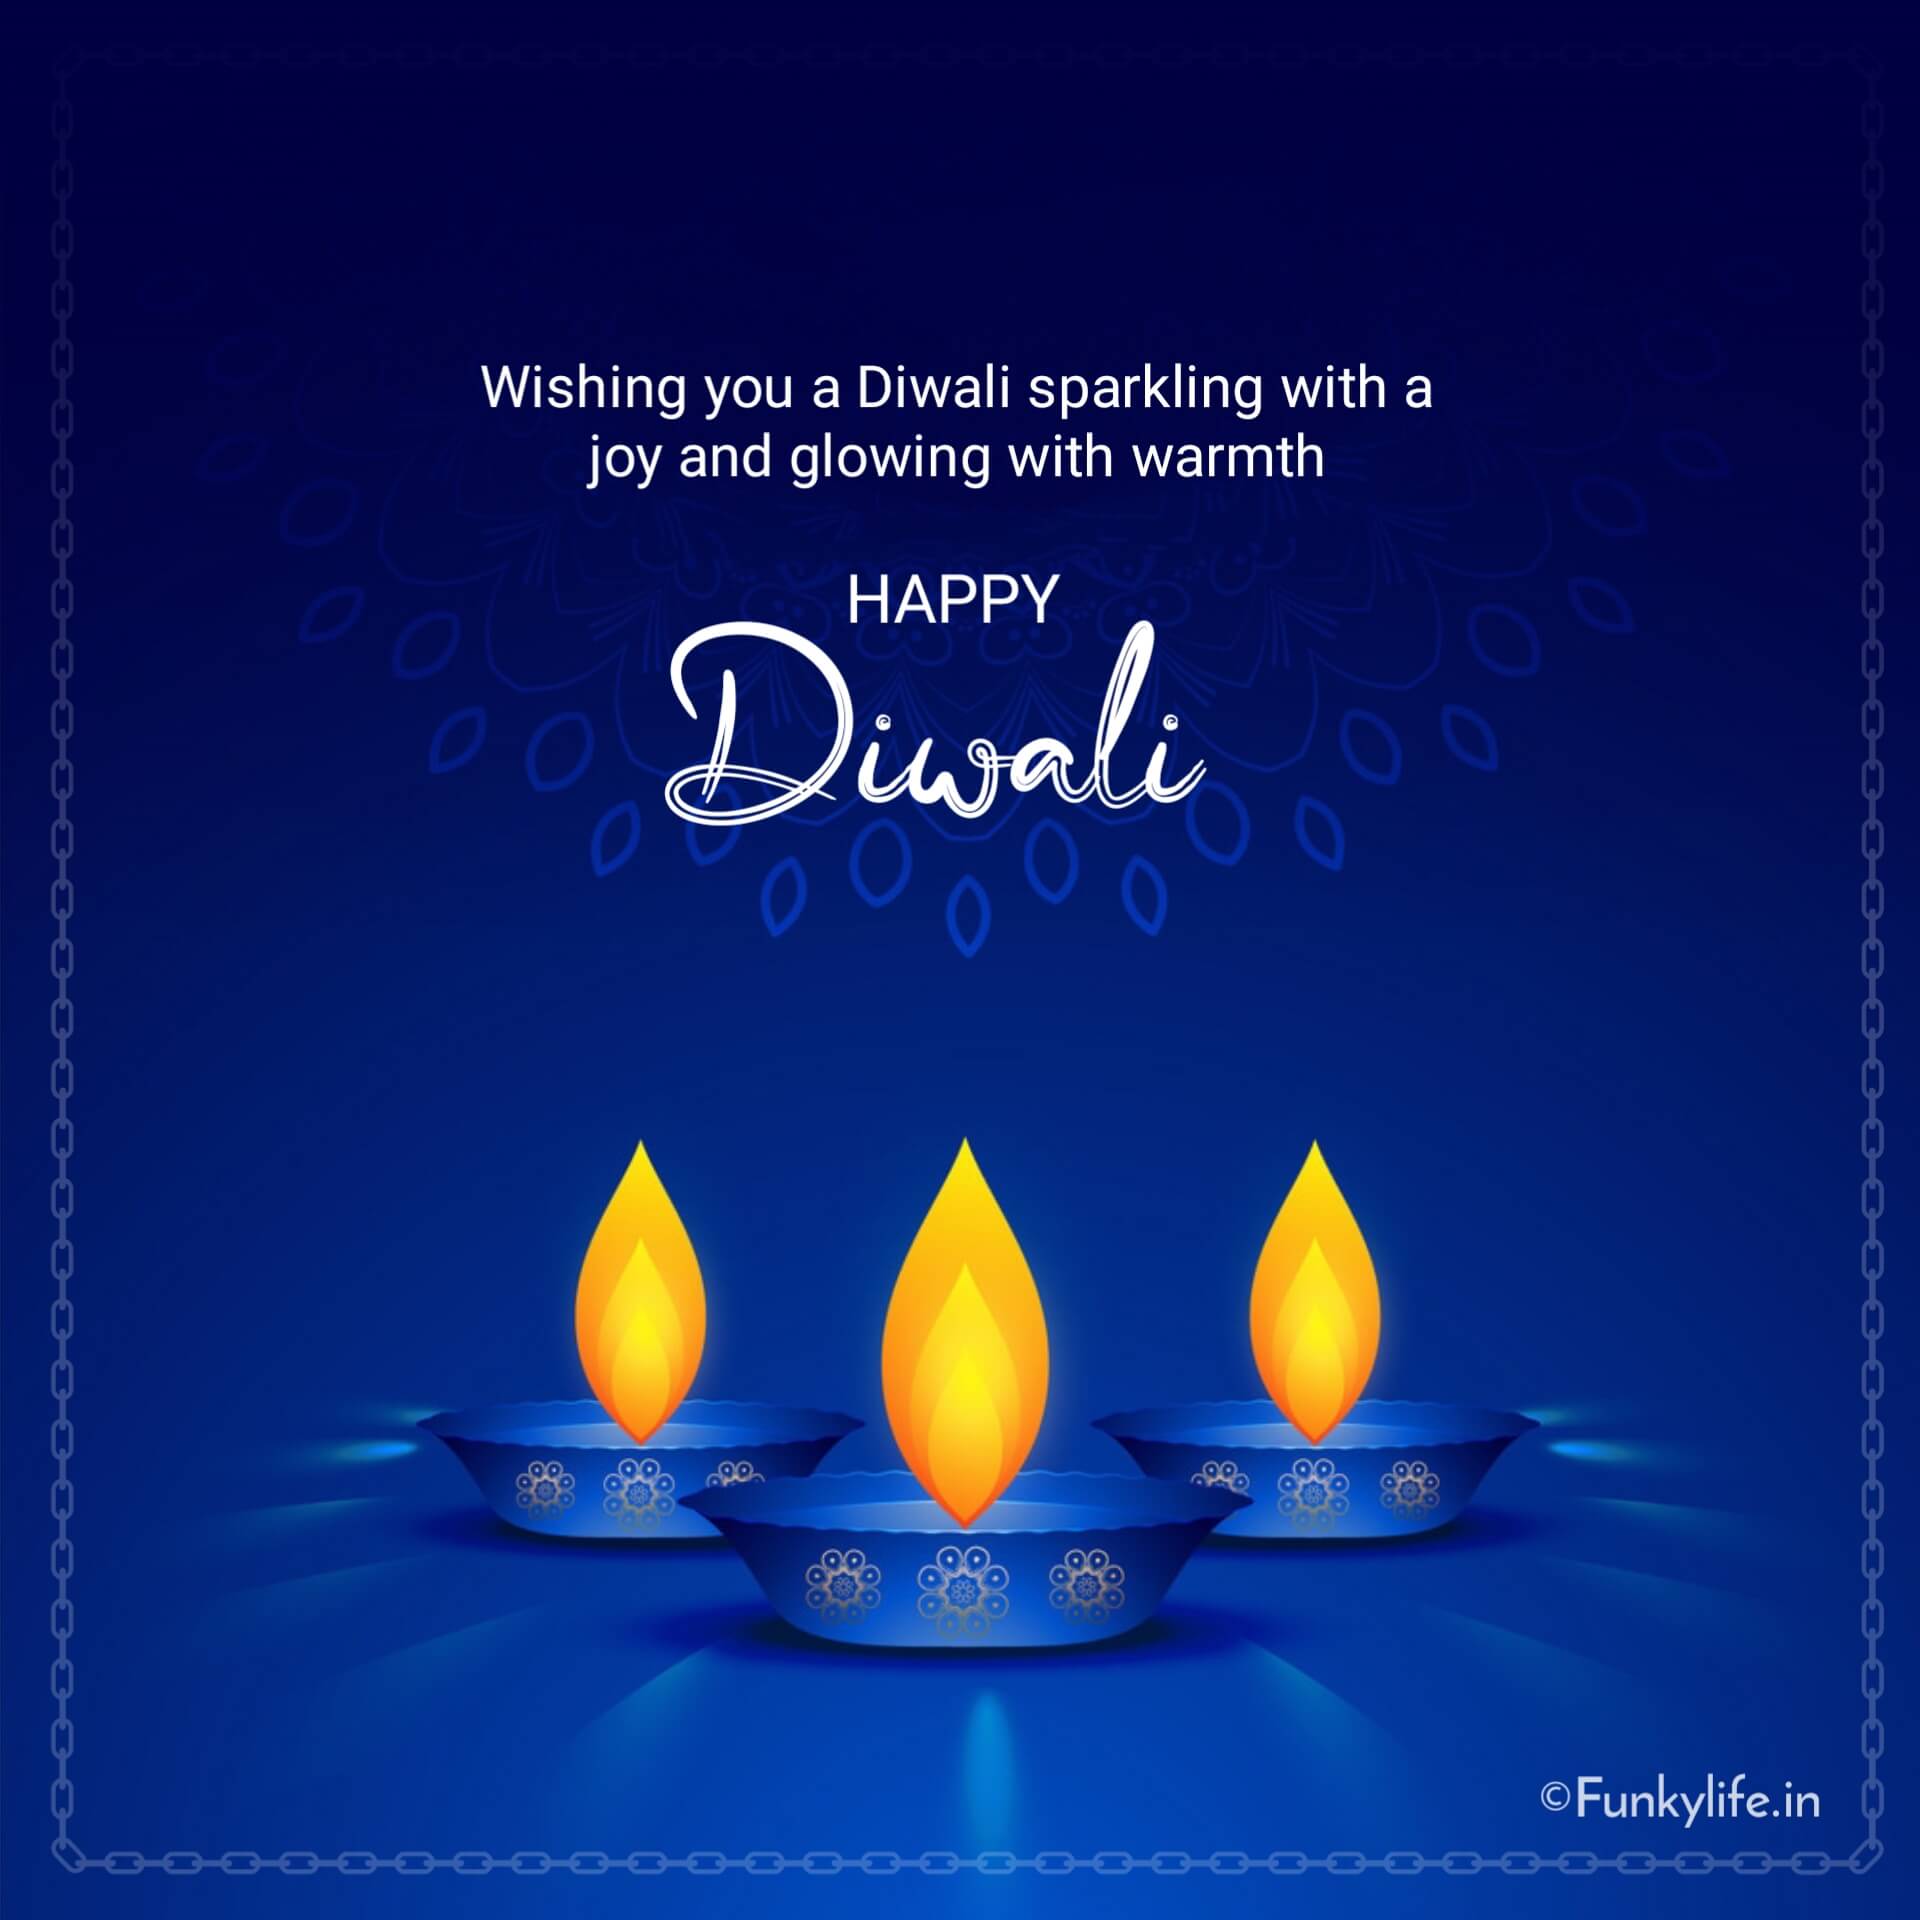 Greeting Diwali Images